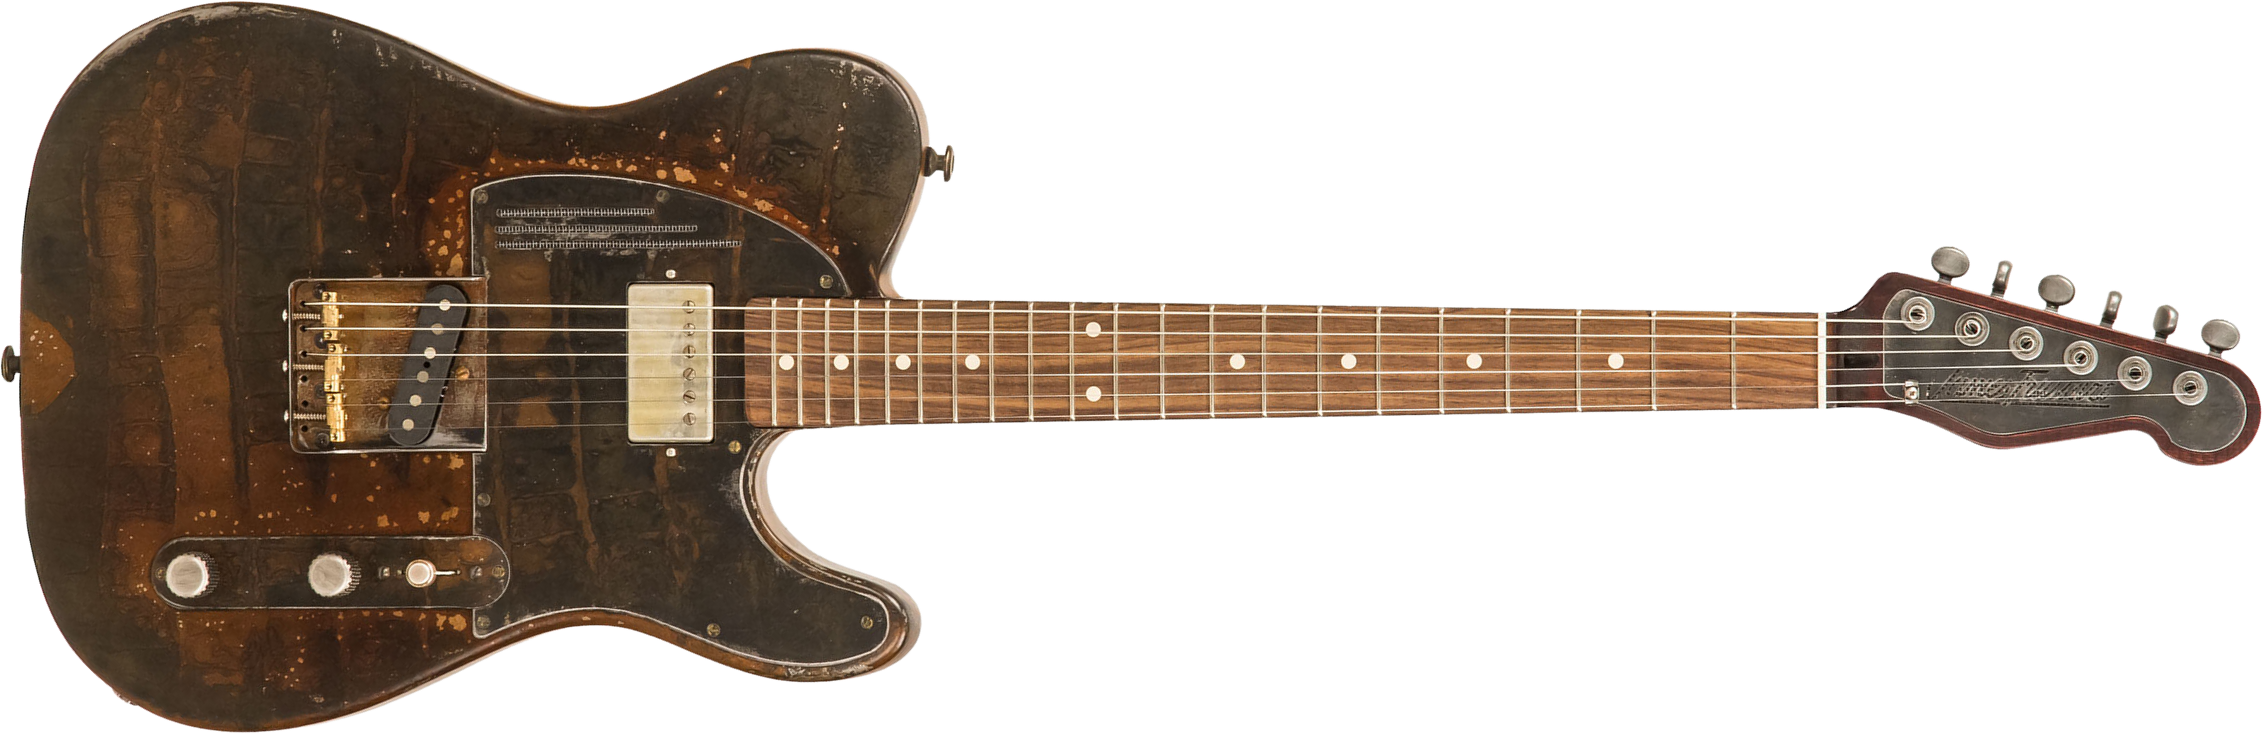 James Trussart Steelcaster Plain Back Sh Pf #20034 - Rust O Matic Gator - Semi-hollow electric guitar - Main picture